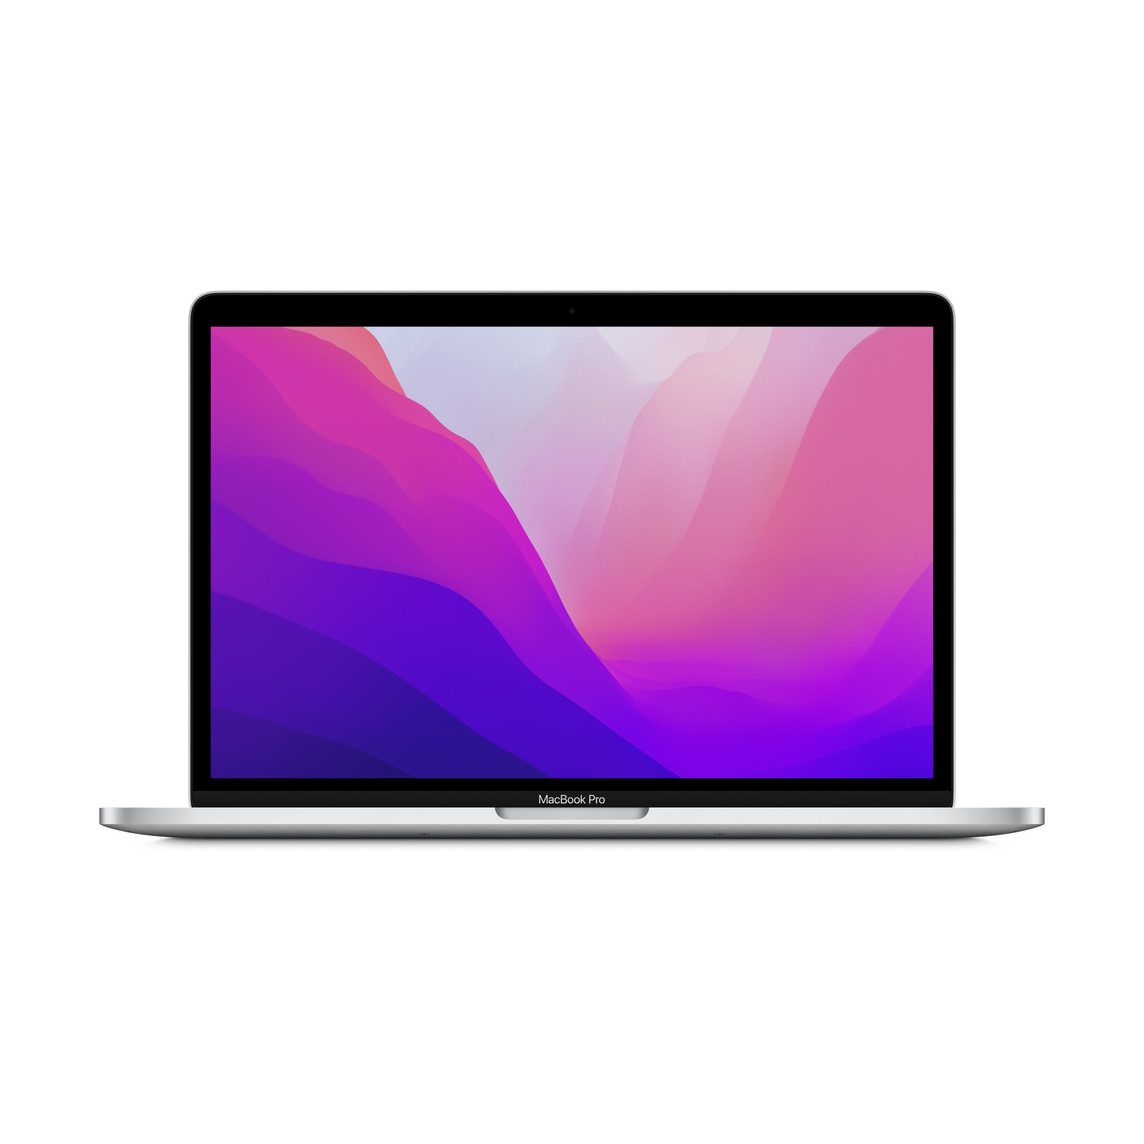 Opengeklapte MacBook Pro, display, dunne rand, FaceTime HD-camera, afgeronde hoeken, spacegrijs